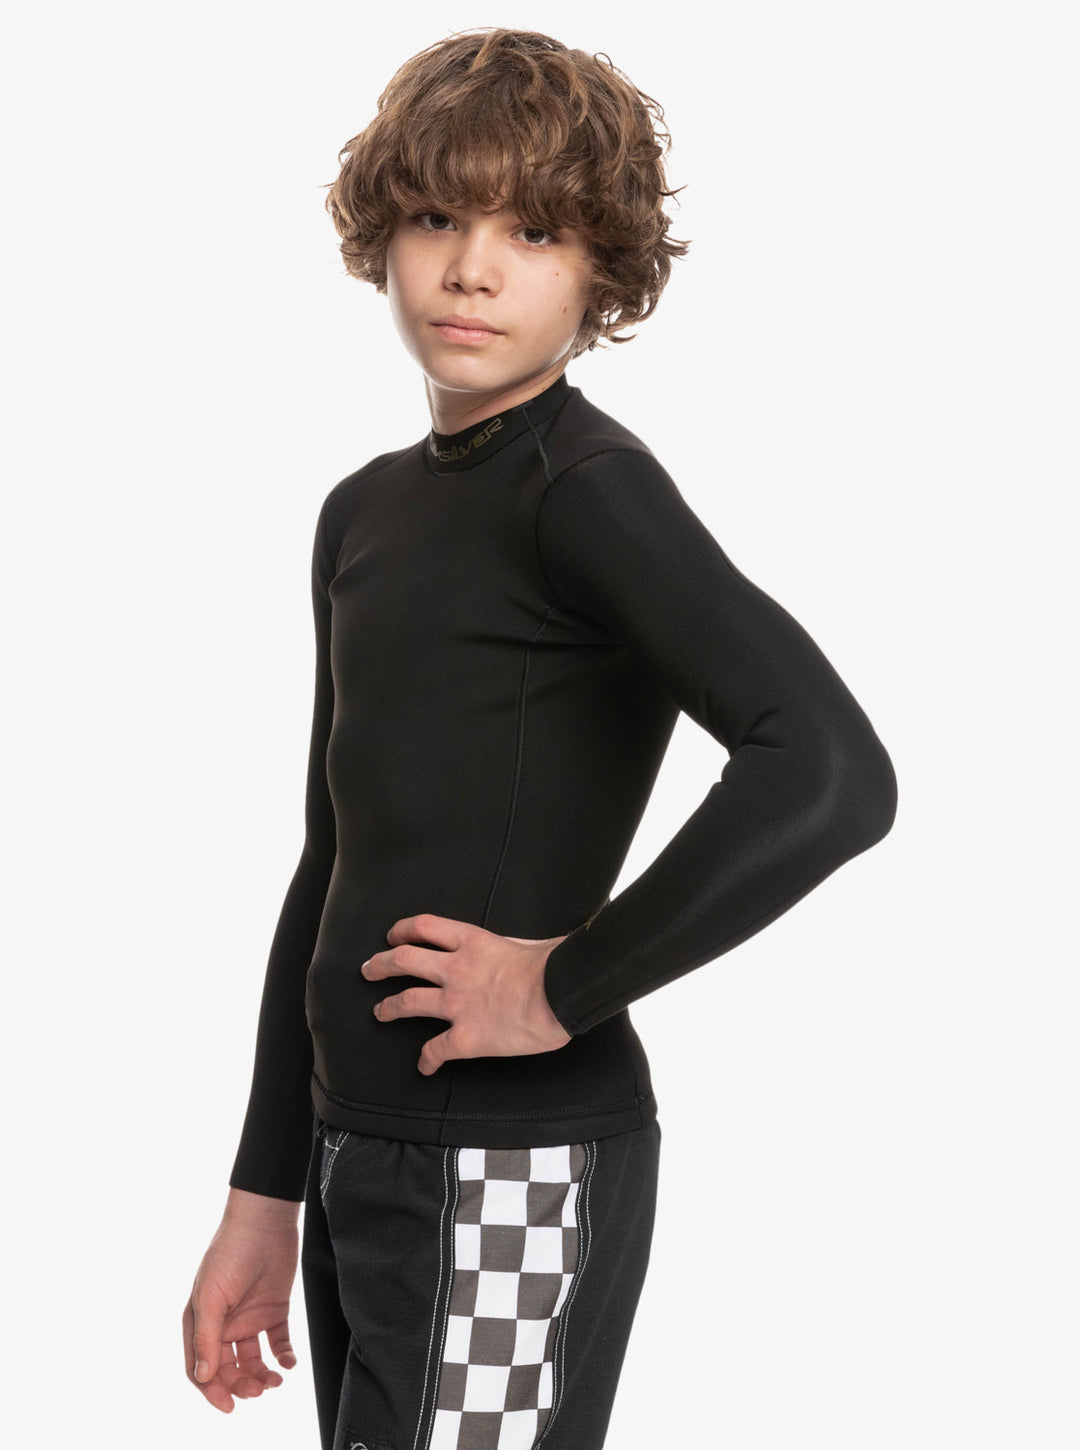 Boys 1.5mm Everyday Sessions Long Sleeve Kids Wetsuit Jacket - Black